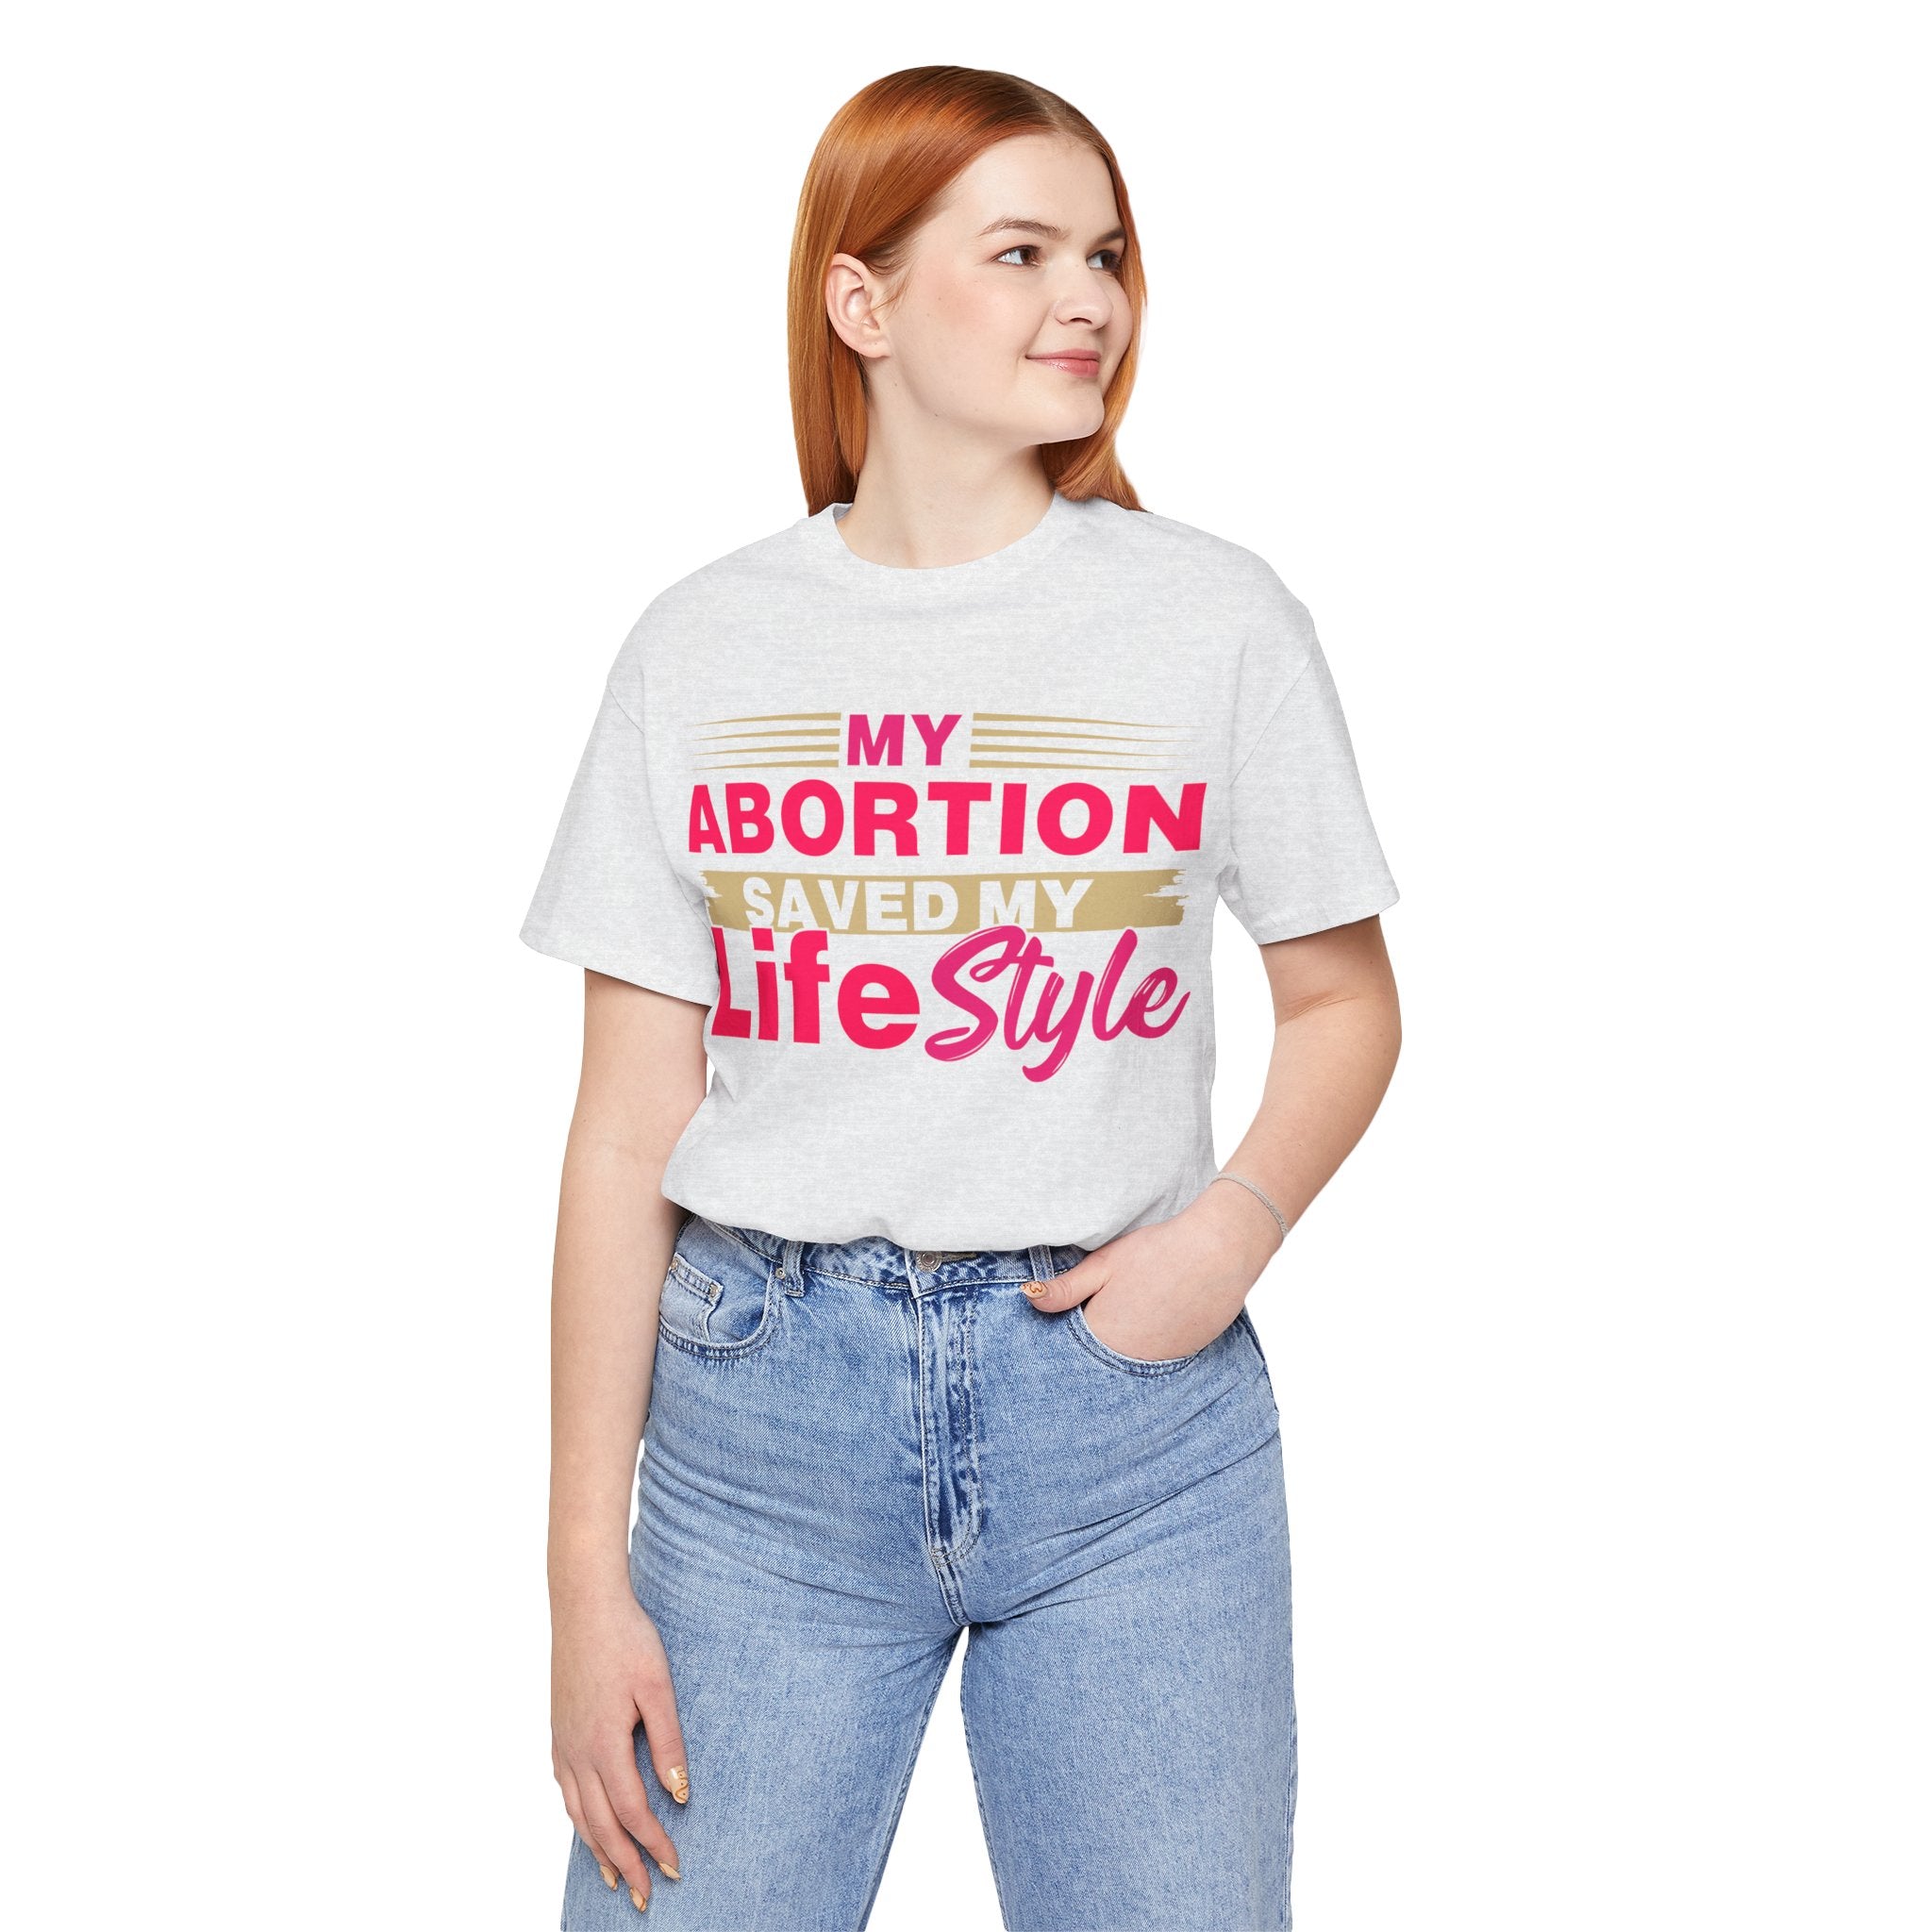 My Abortion Saved My LifeStyle